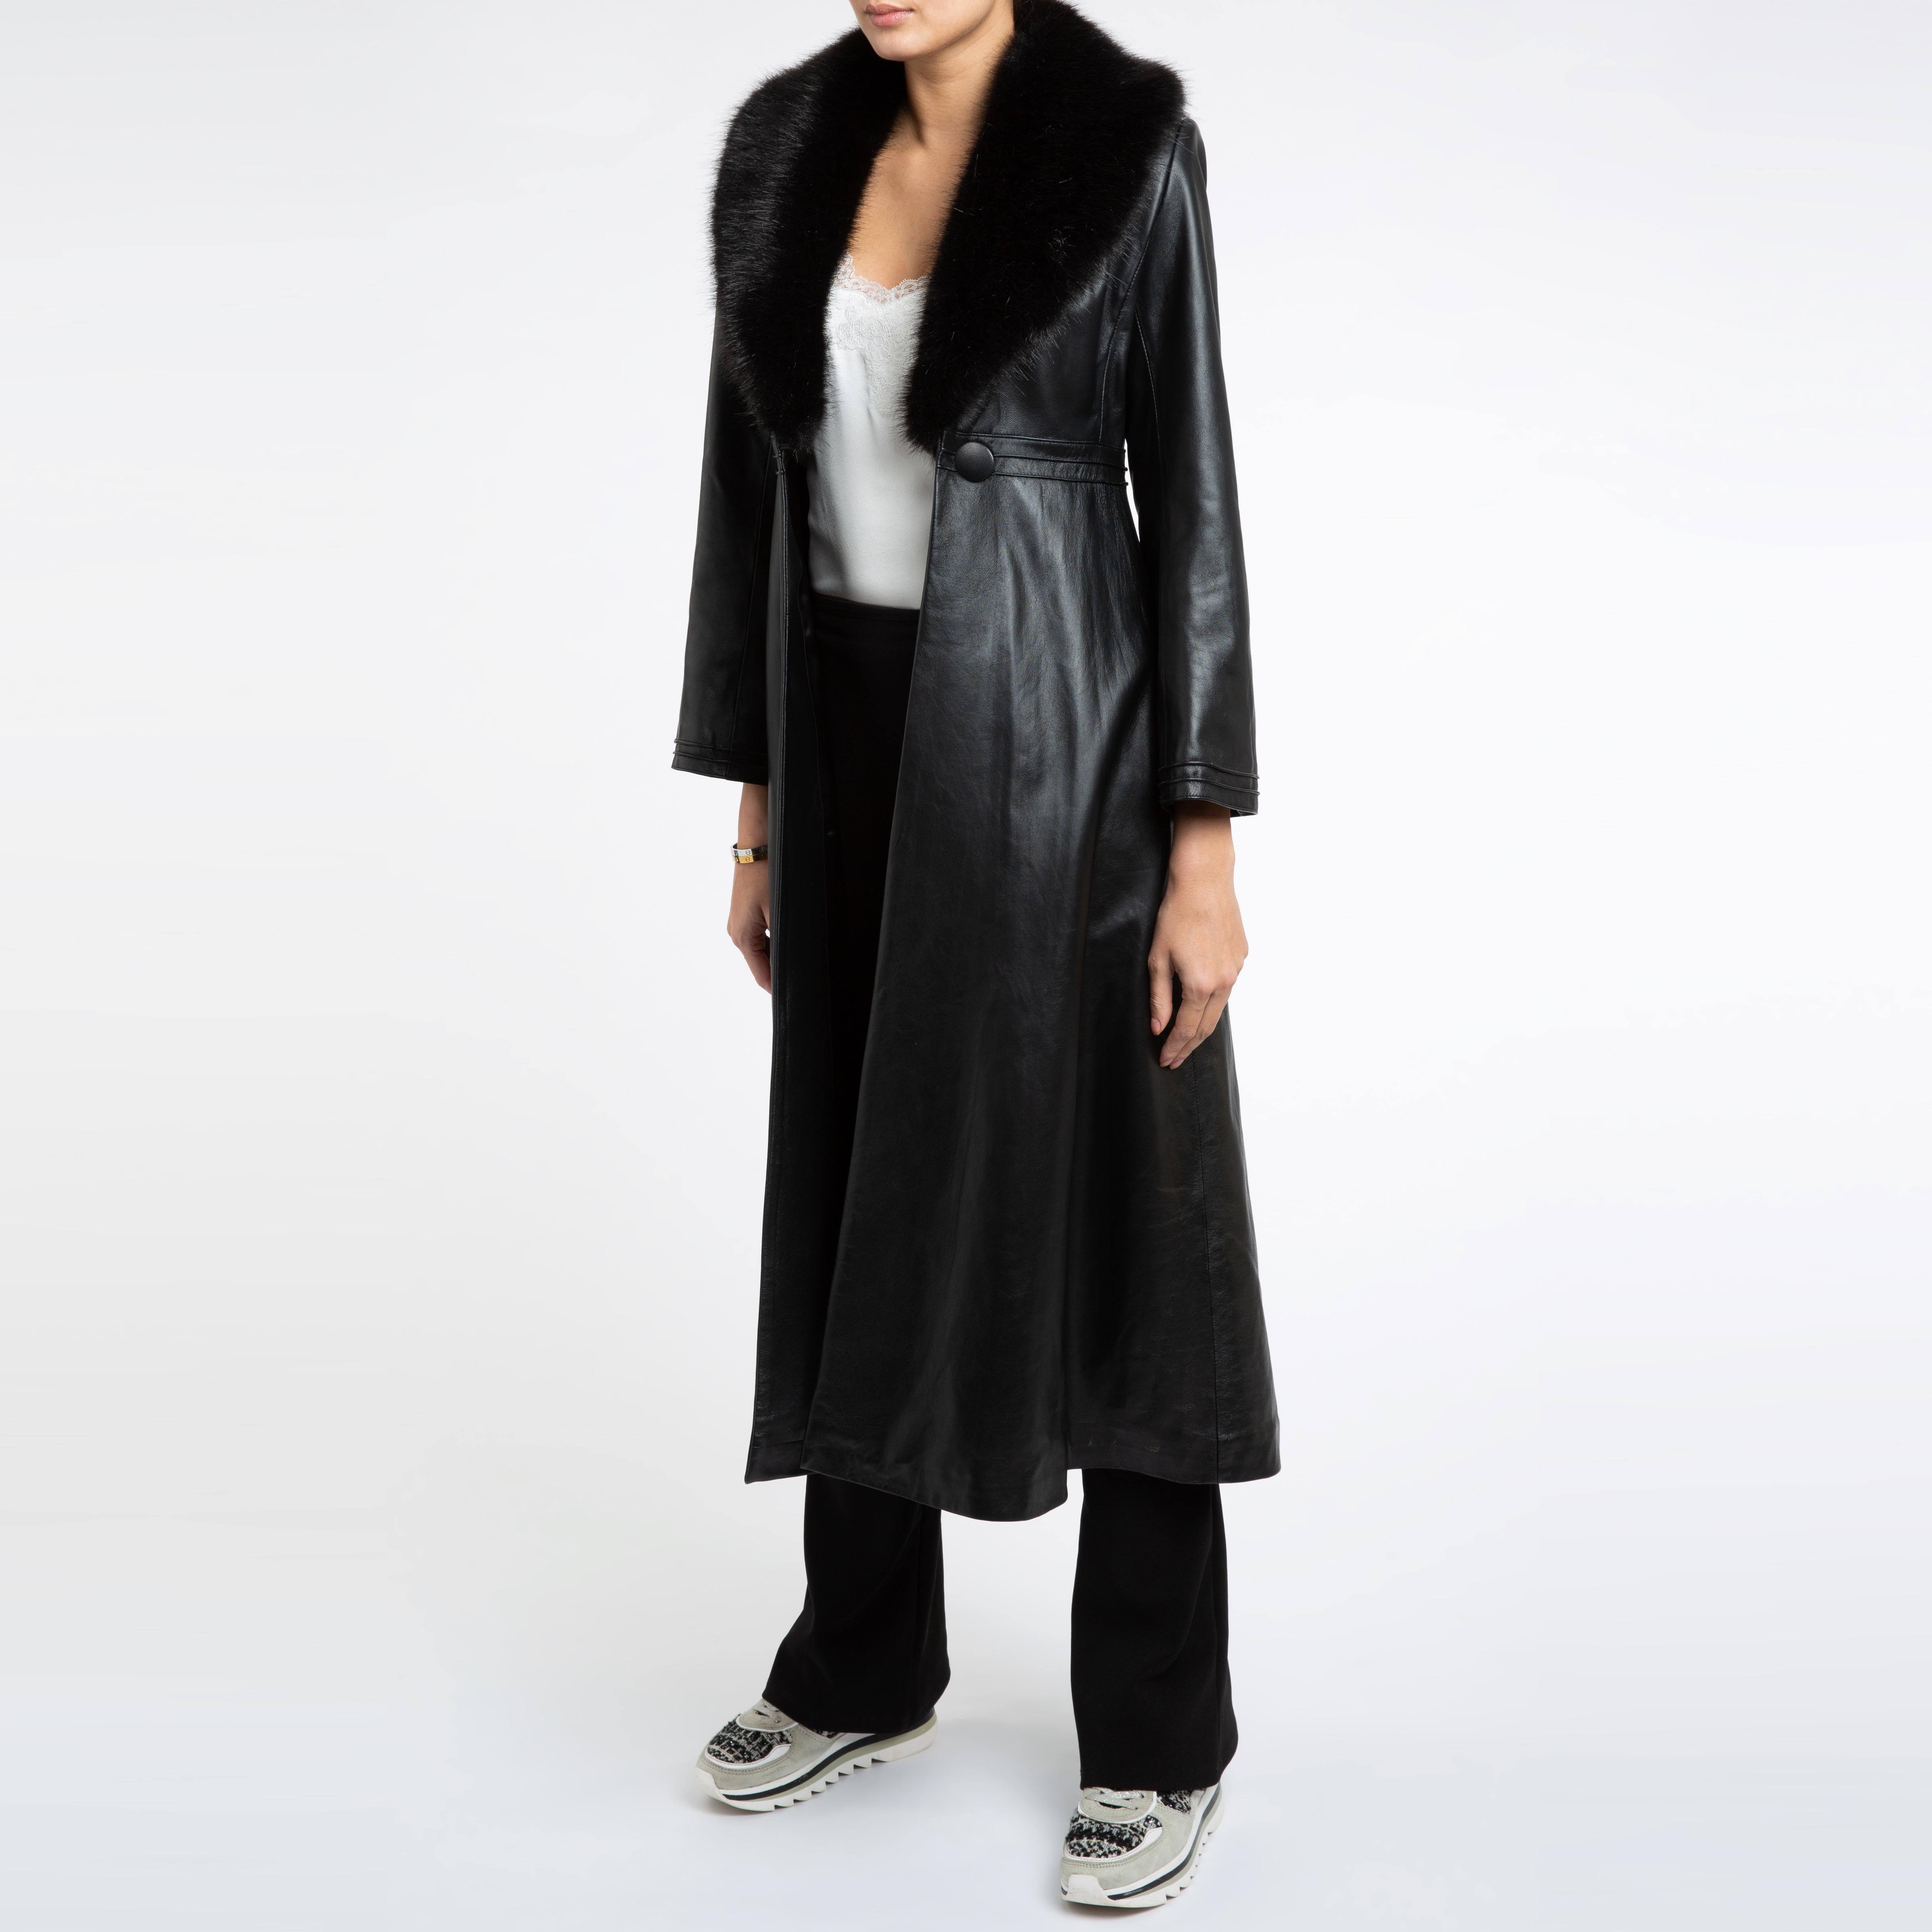 Verheyen London Edward Leather Coat with Faux Fur Collar in Black - Size uk 16 For Sale 1